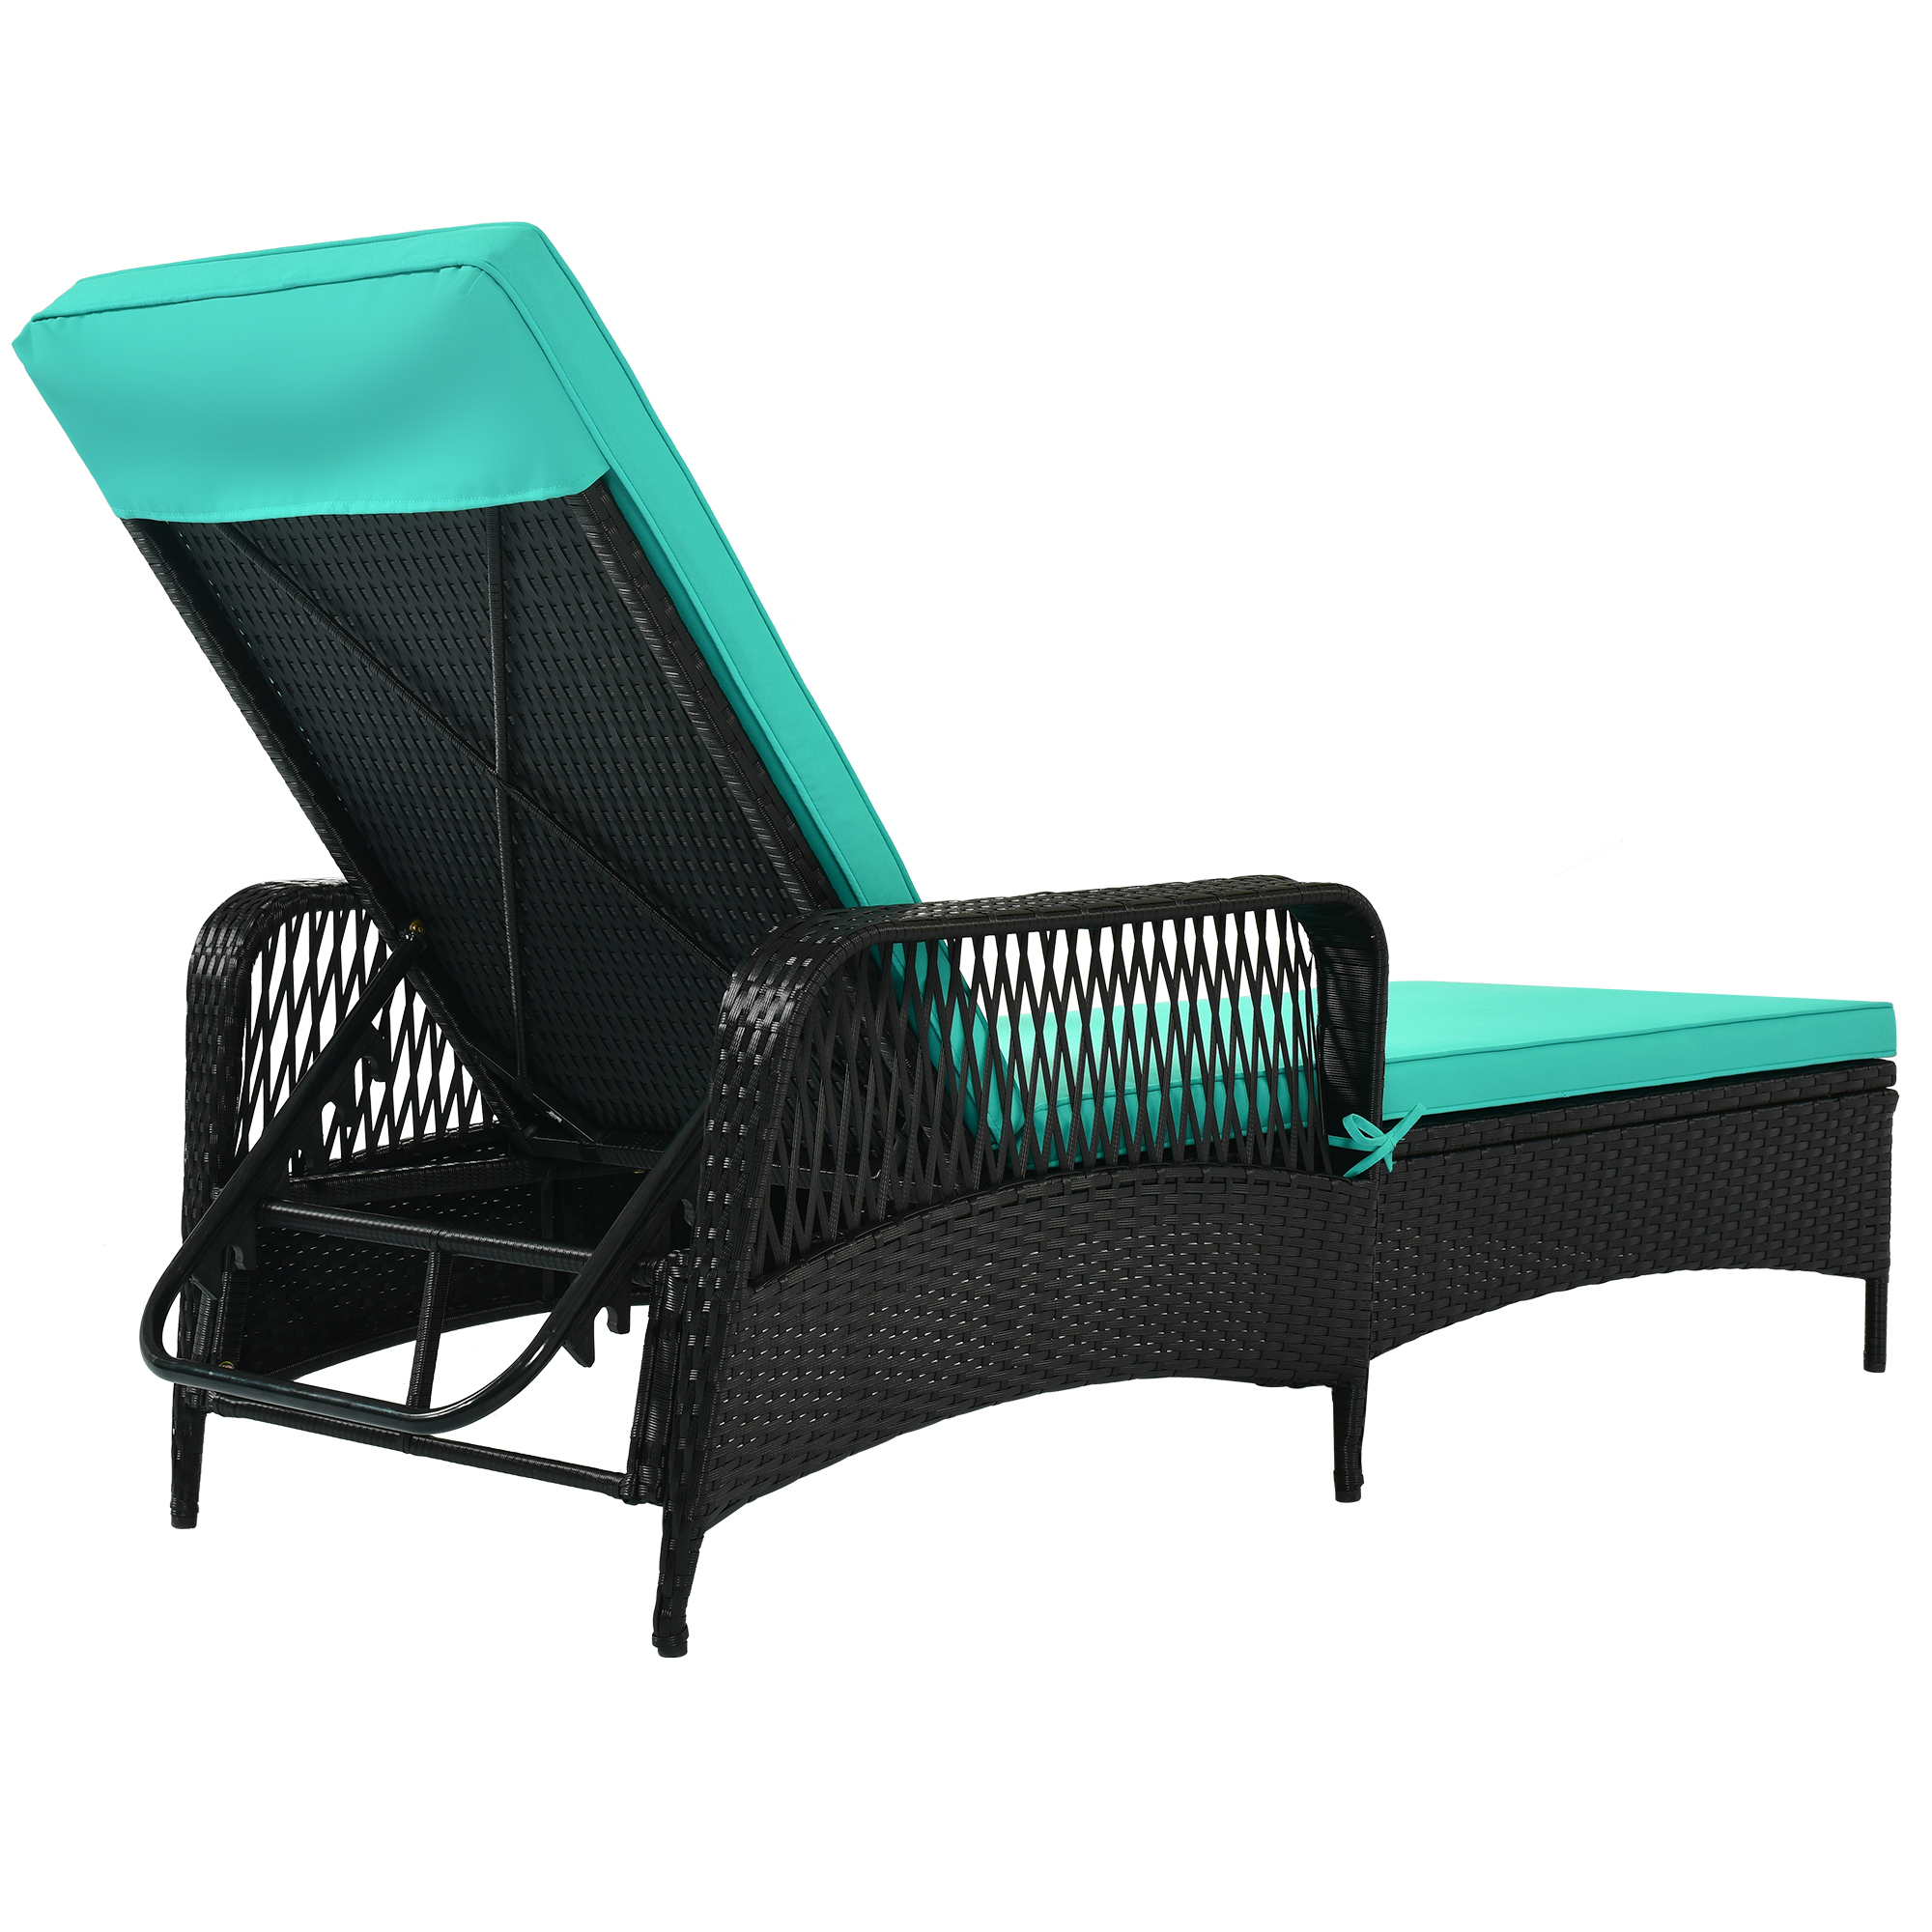 Sesslife Adjustable Outdoor Steel Patio Chaise Lounge Chair with 6 Positions, Chaise Lounge Chair for Poolside Backyard, UV-Resistant PE Rattan Wicker Chaise Lounge Chair with Green Cushion - image 3 of 9